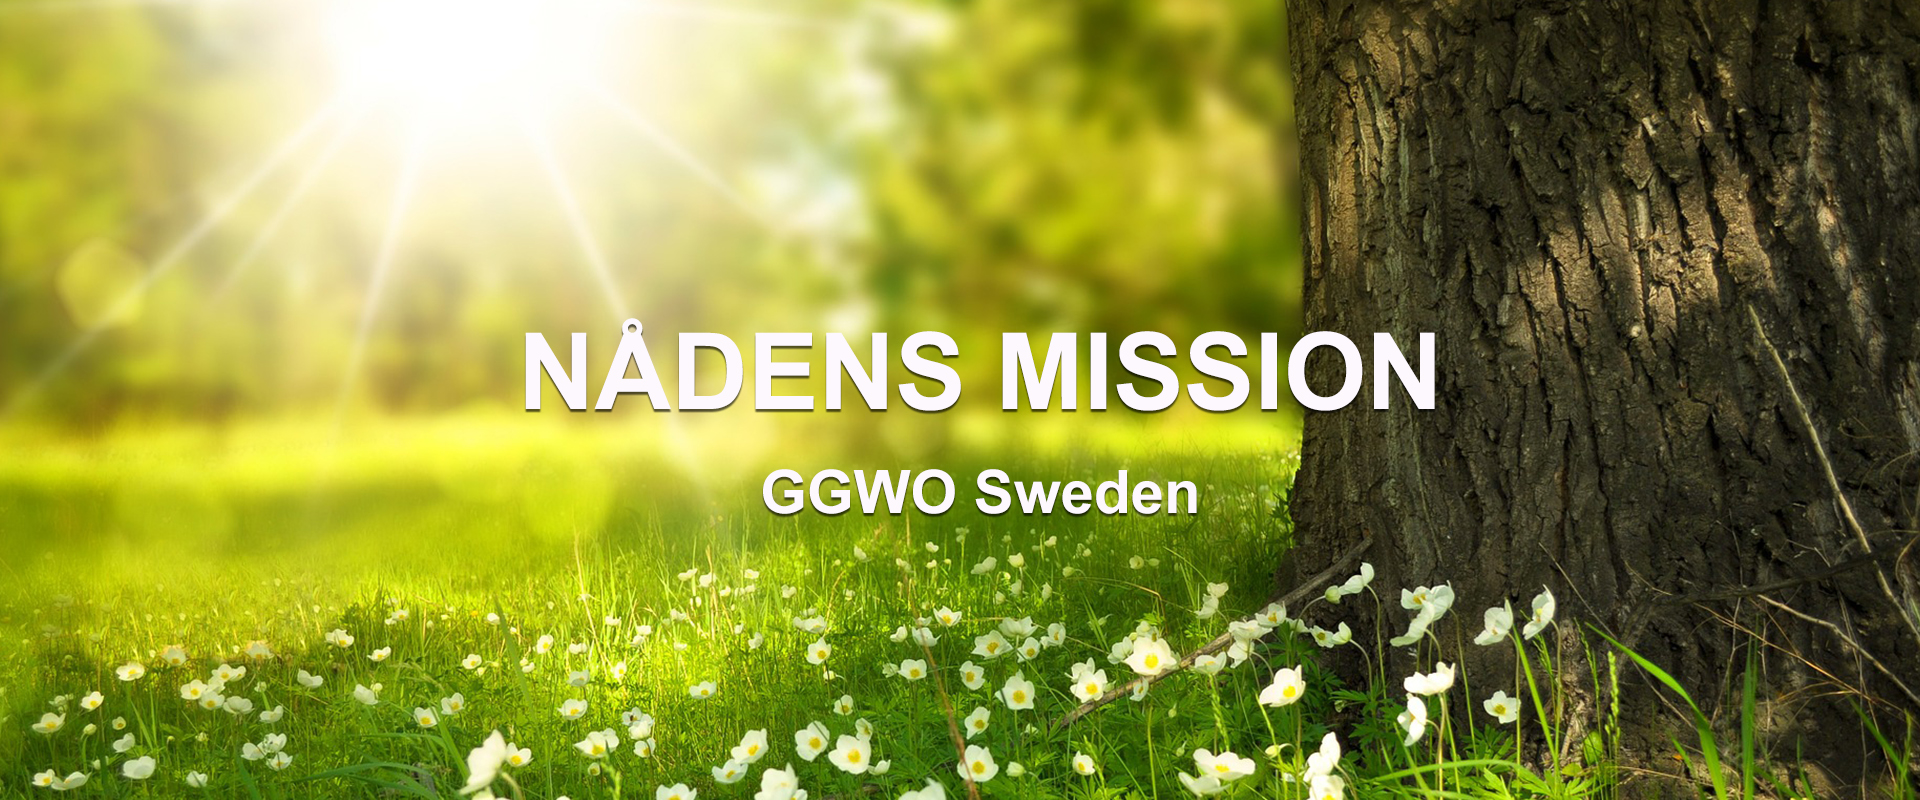 Bildtext: Nådens Mission, ggwo Sweden